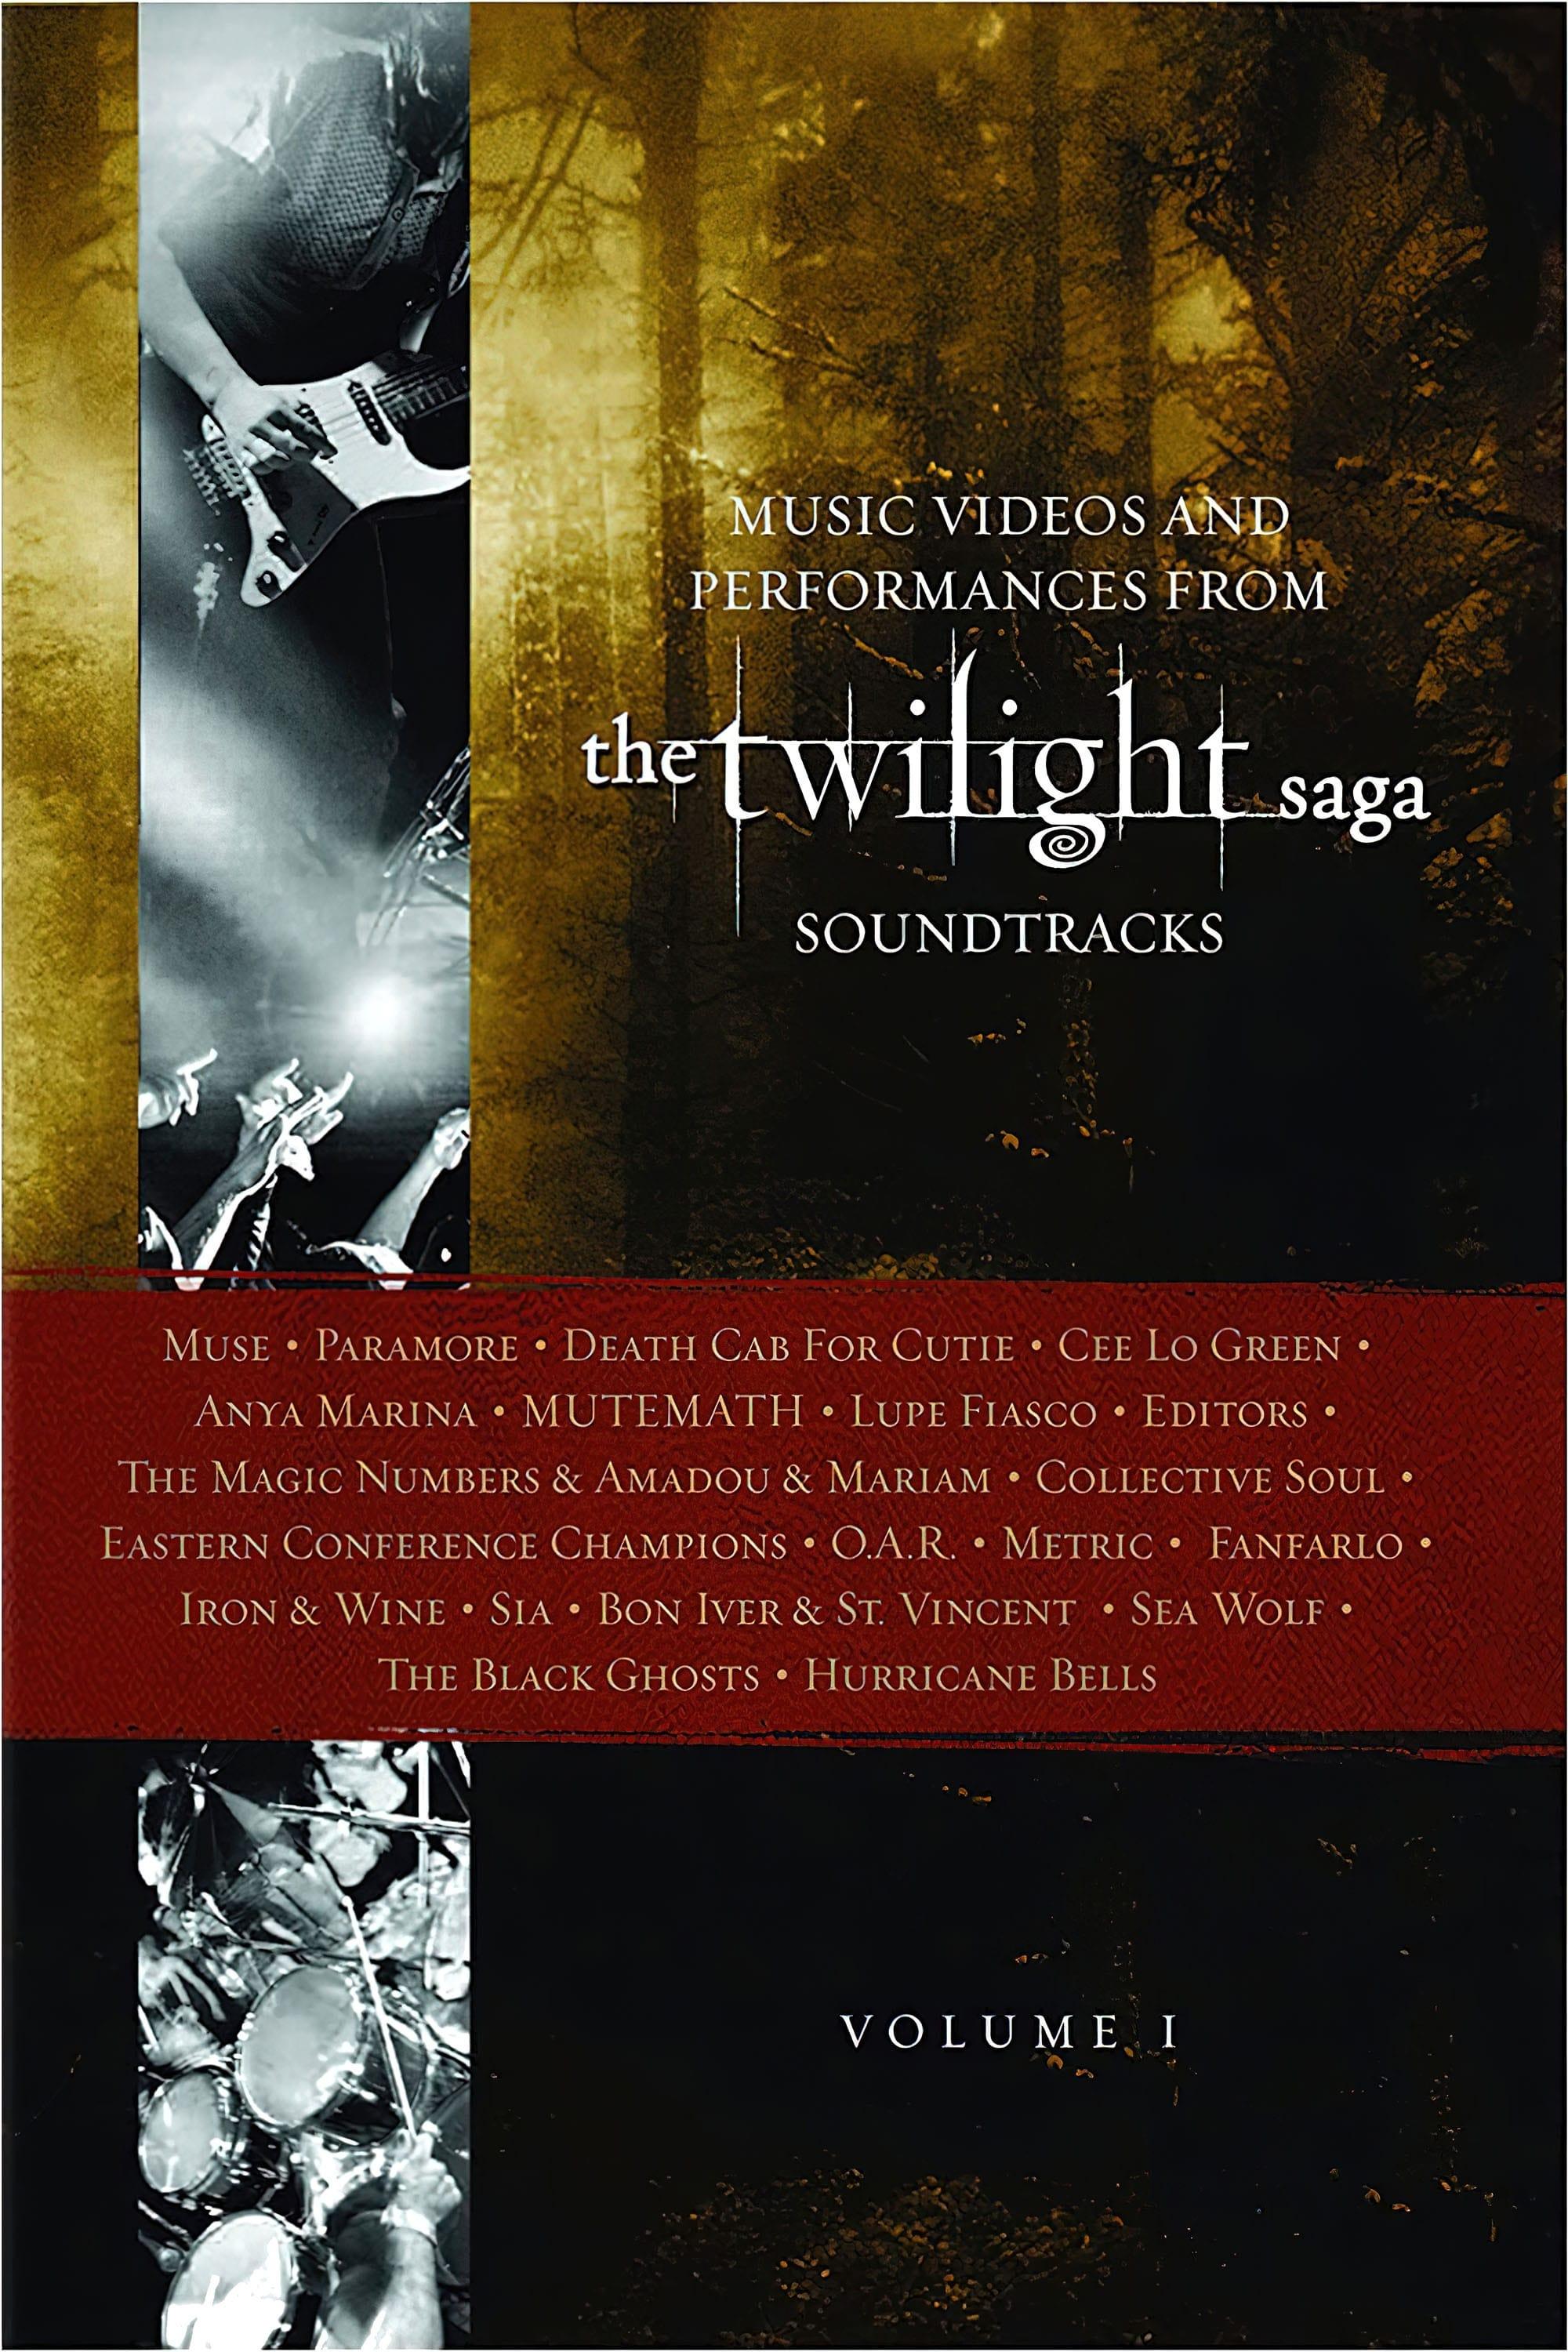 The Twilight Saga Soundtracks, Vol 1 : Music Videos and Performances poster